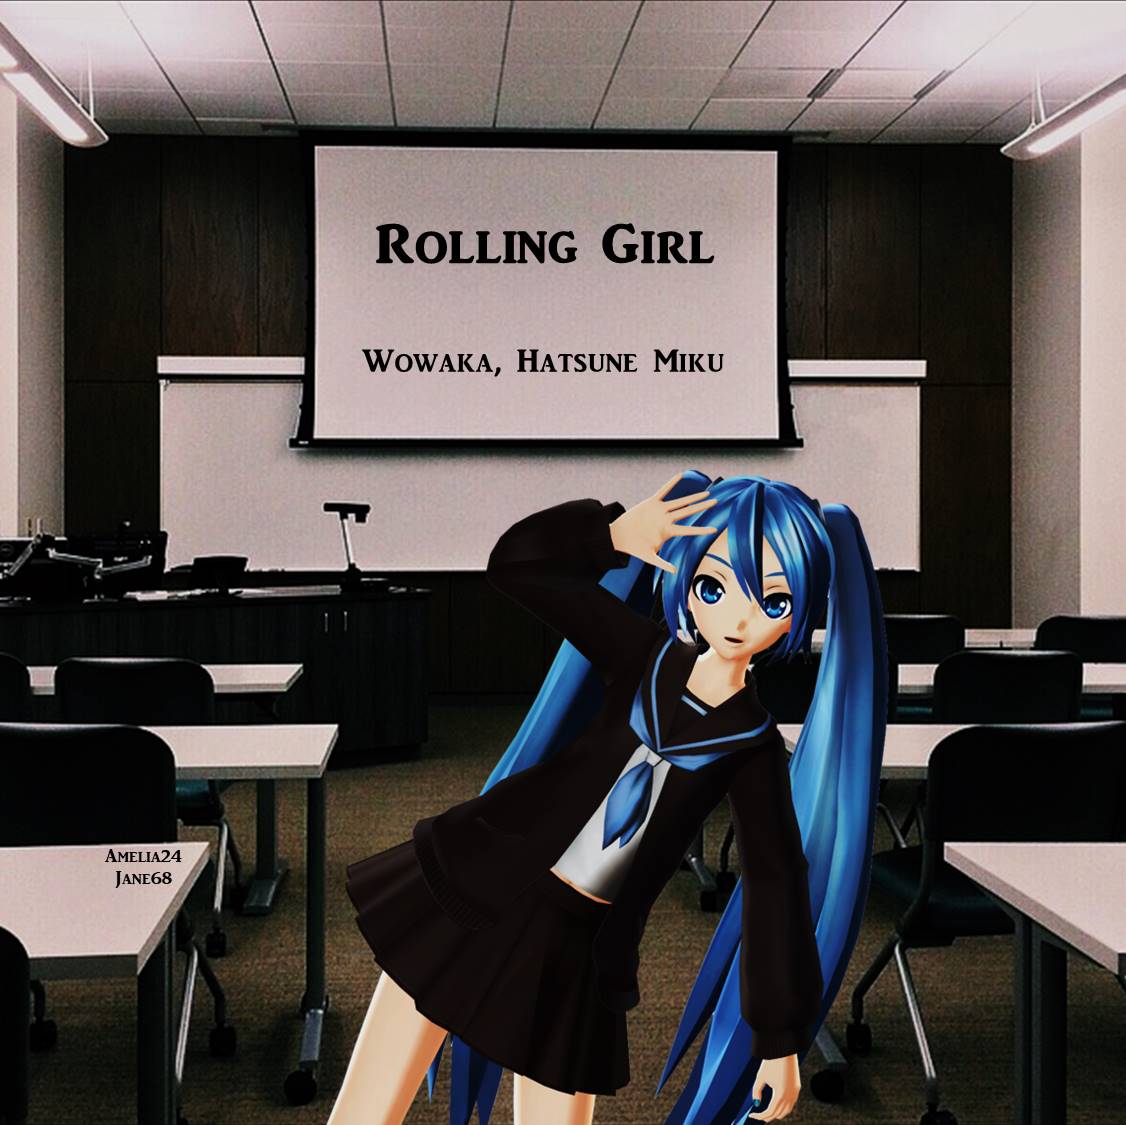  Rolling Girl sa pamamagitan ng Wowaka, Hatsune Miku